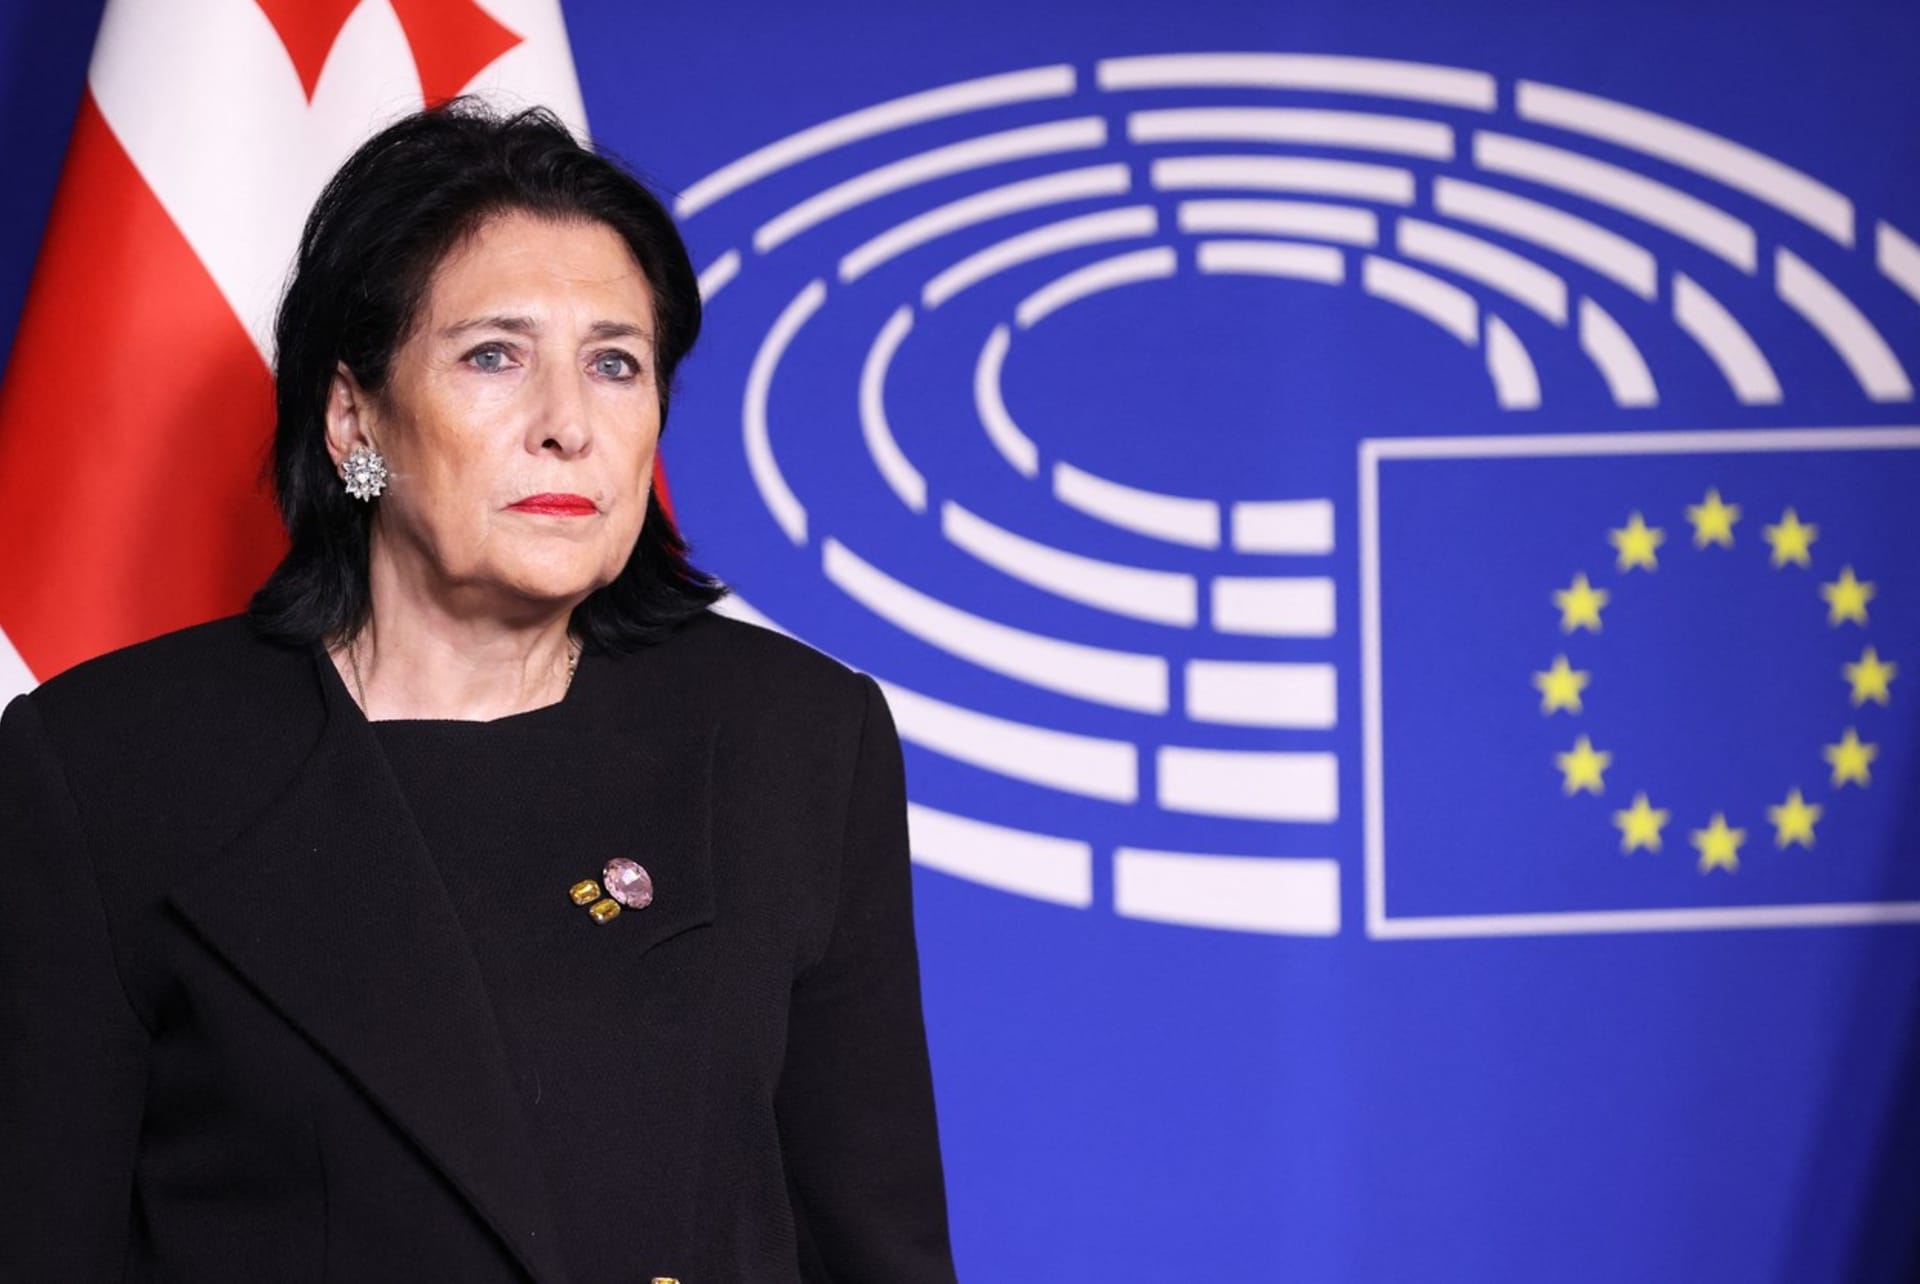 Gruzínská prezidentka Salome Zurabišviliová v Evropském parlamentu